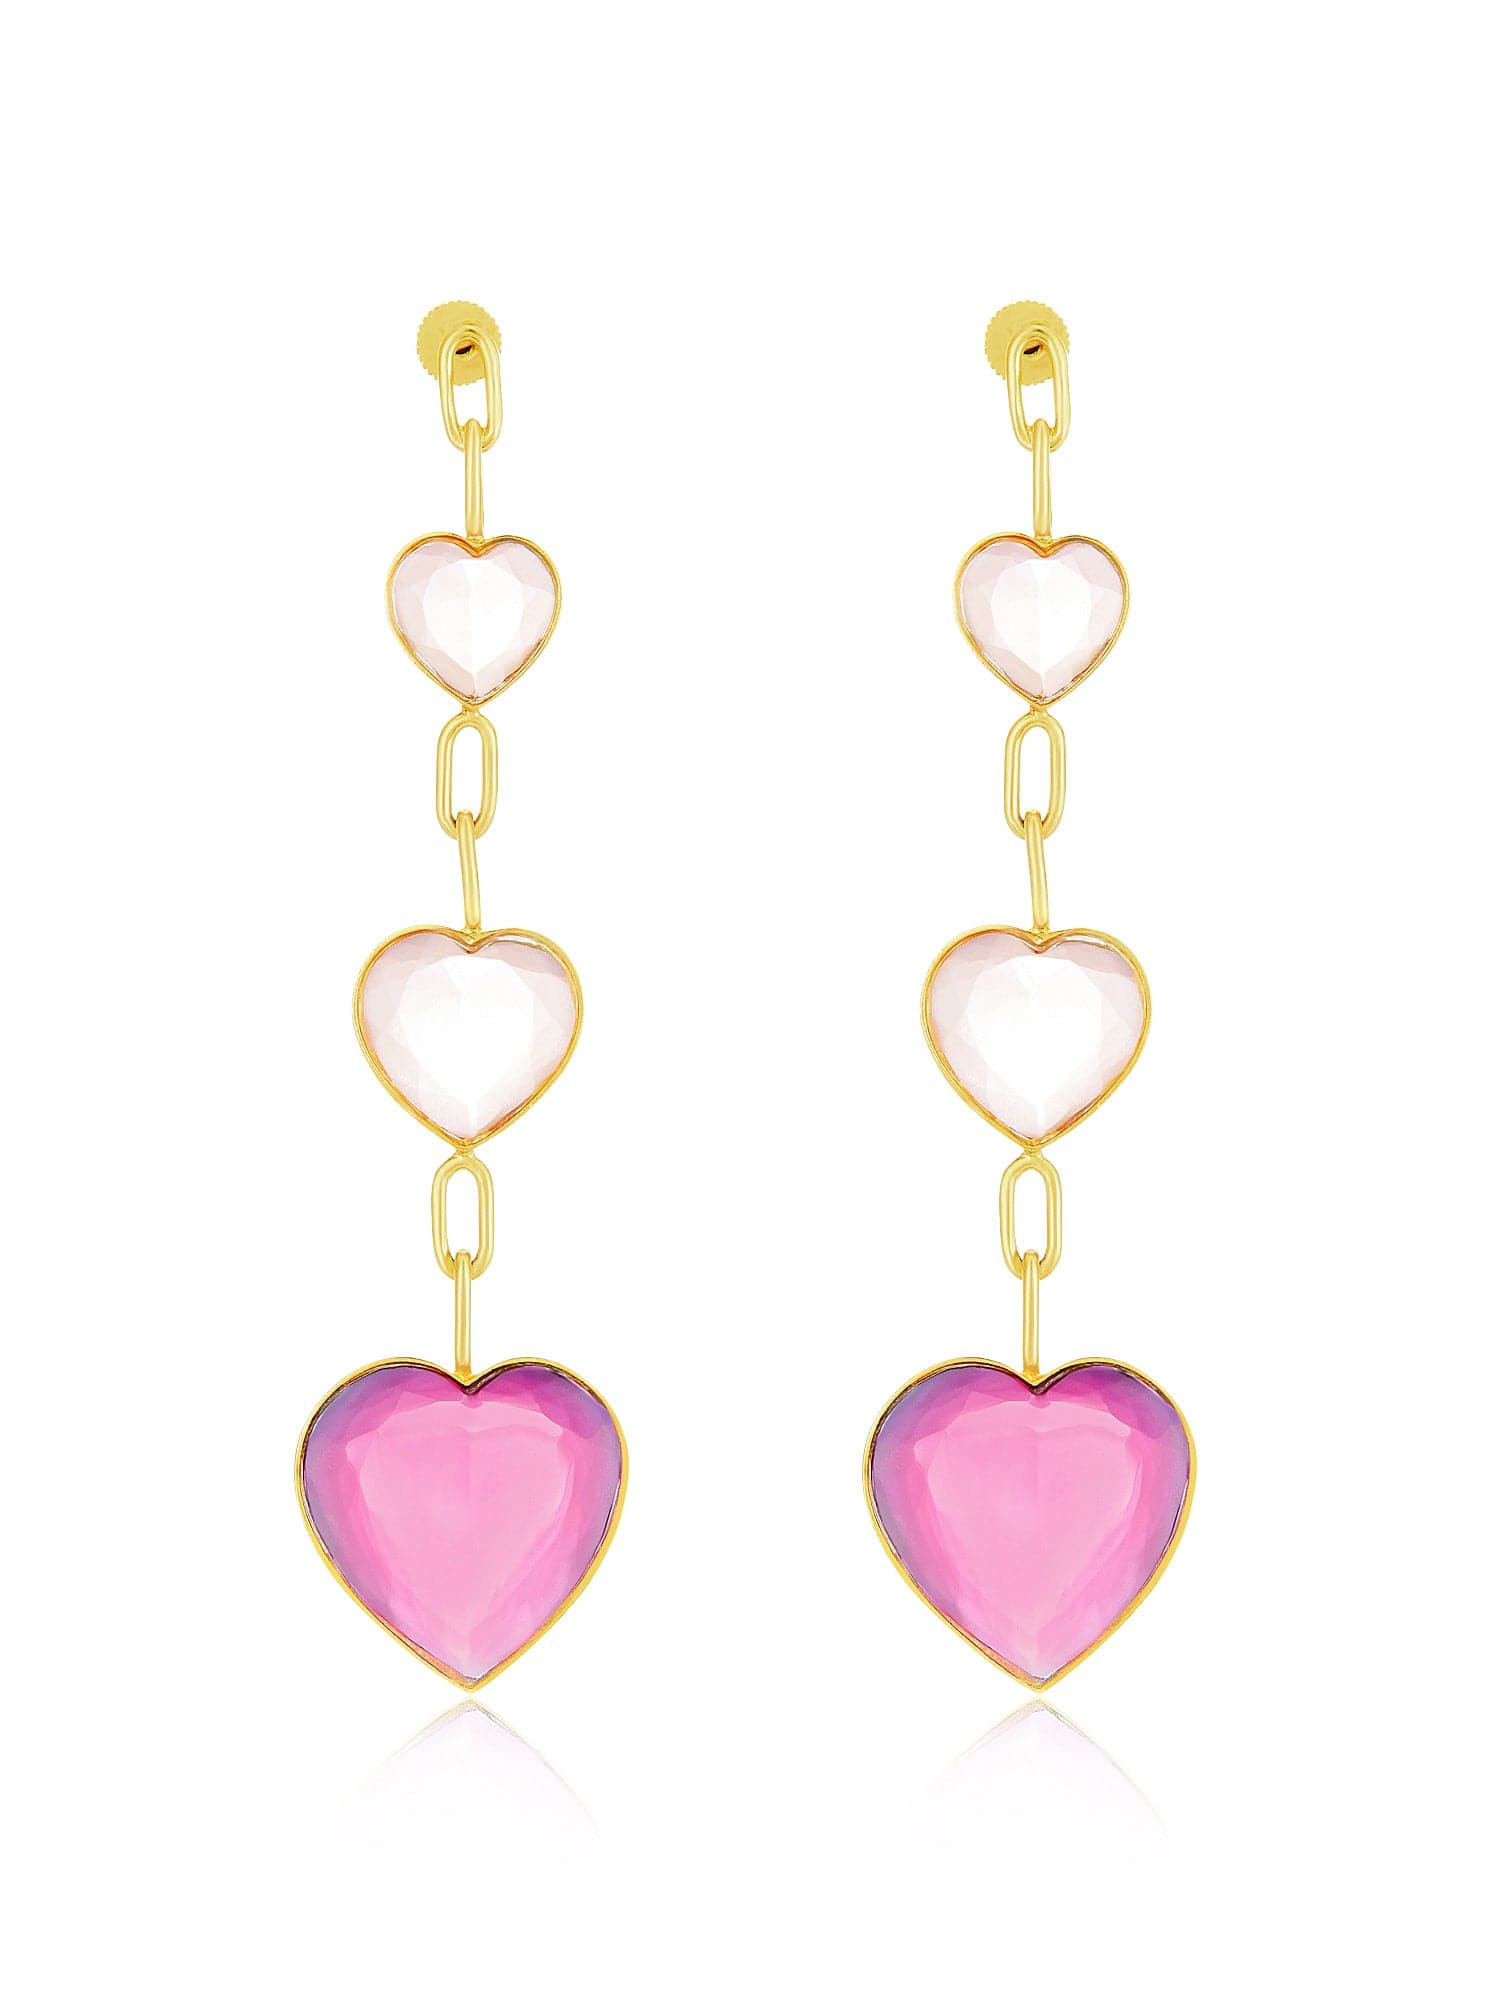 Philia heart earrings